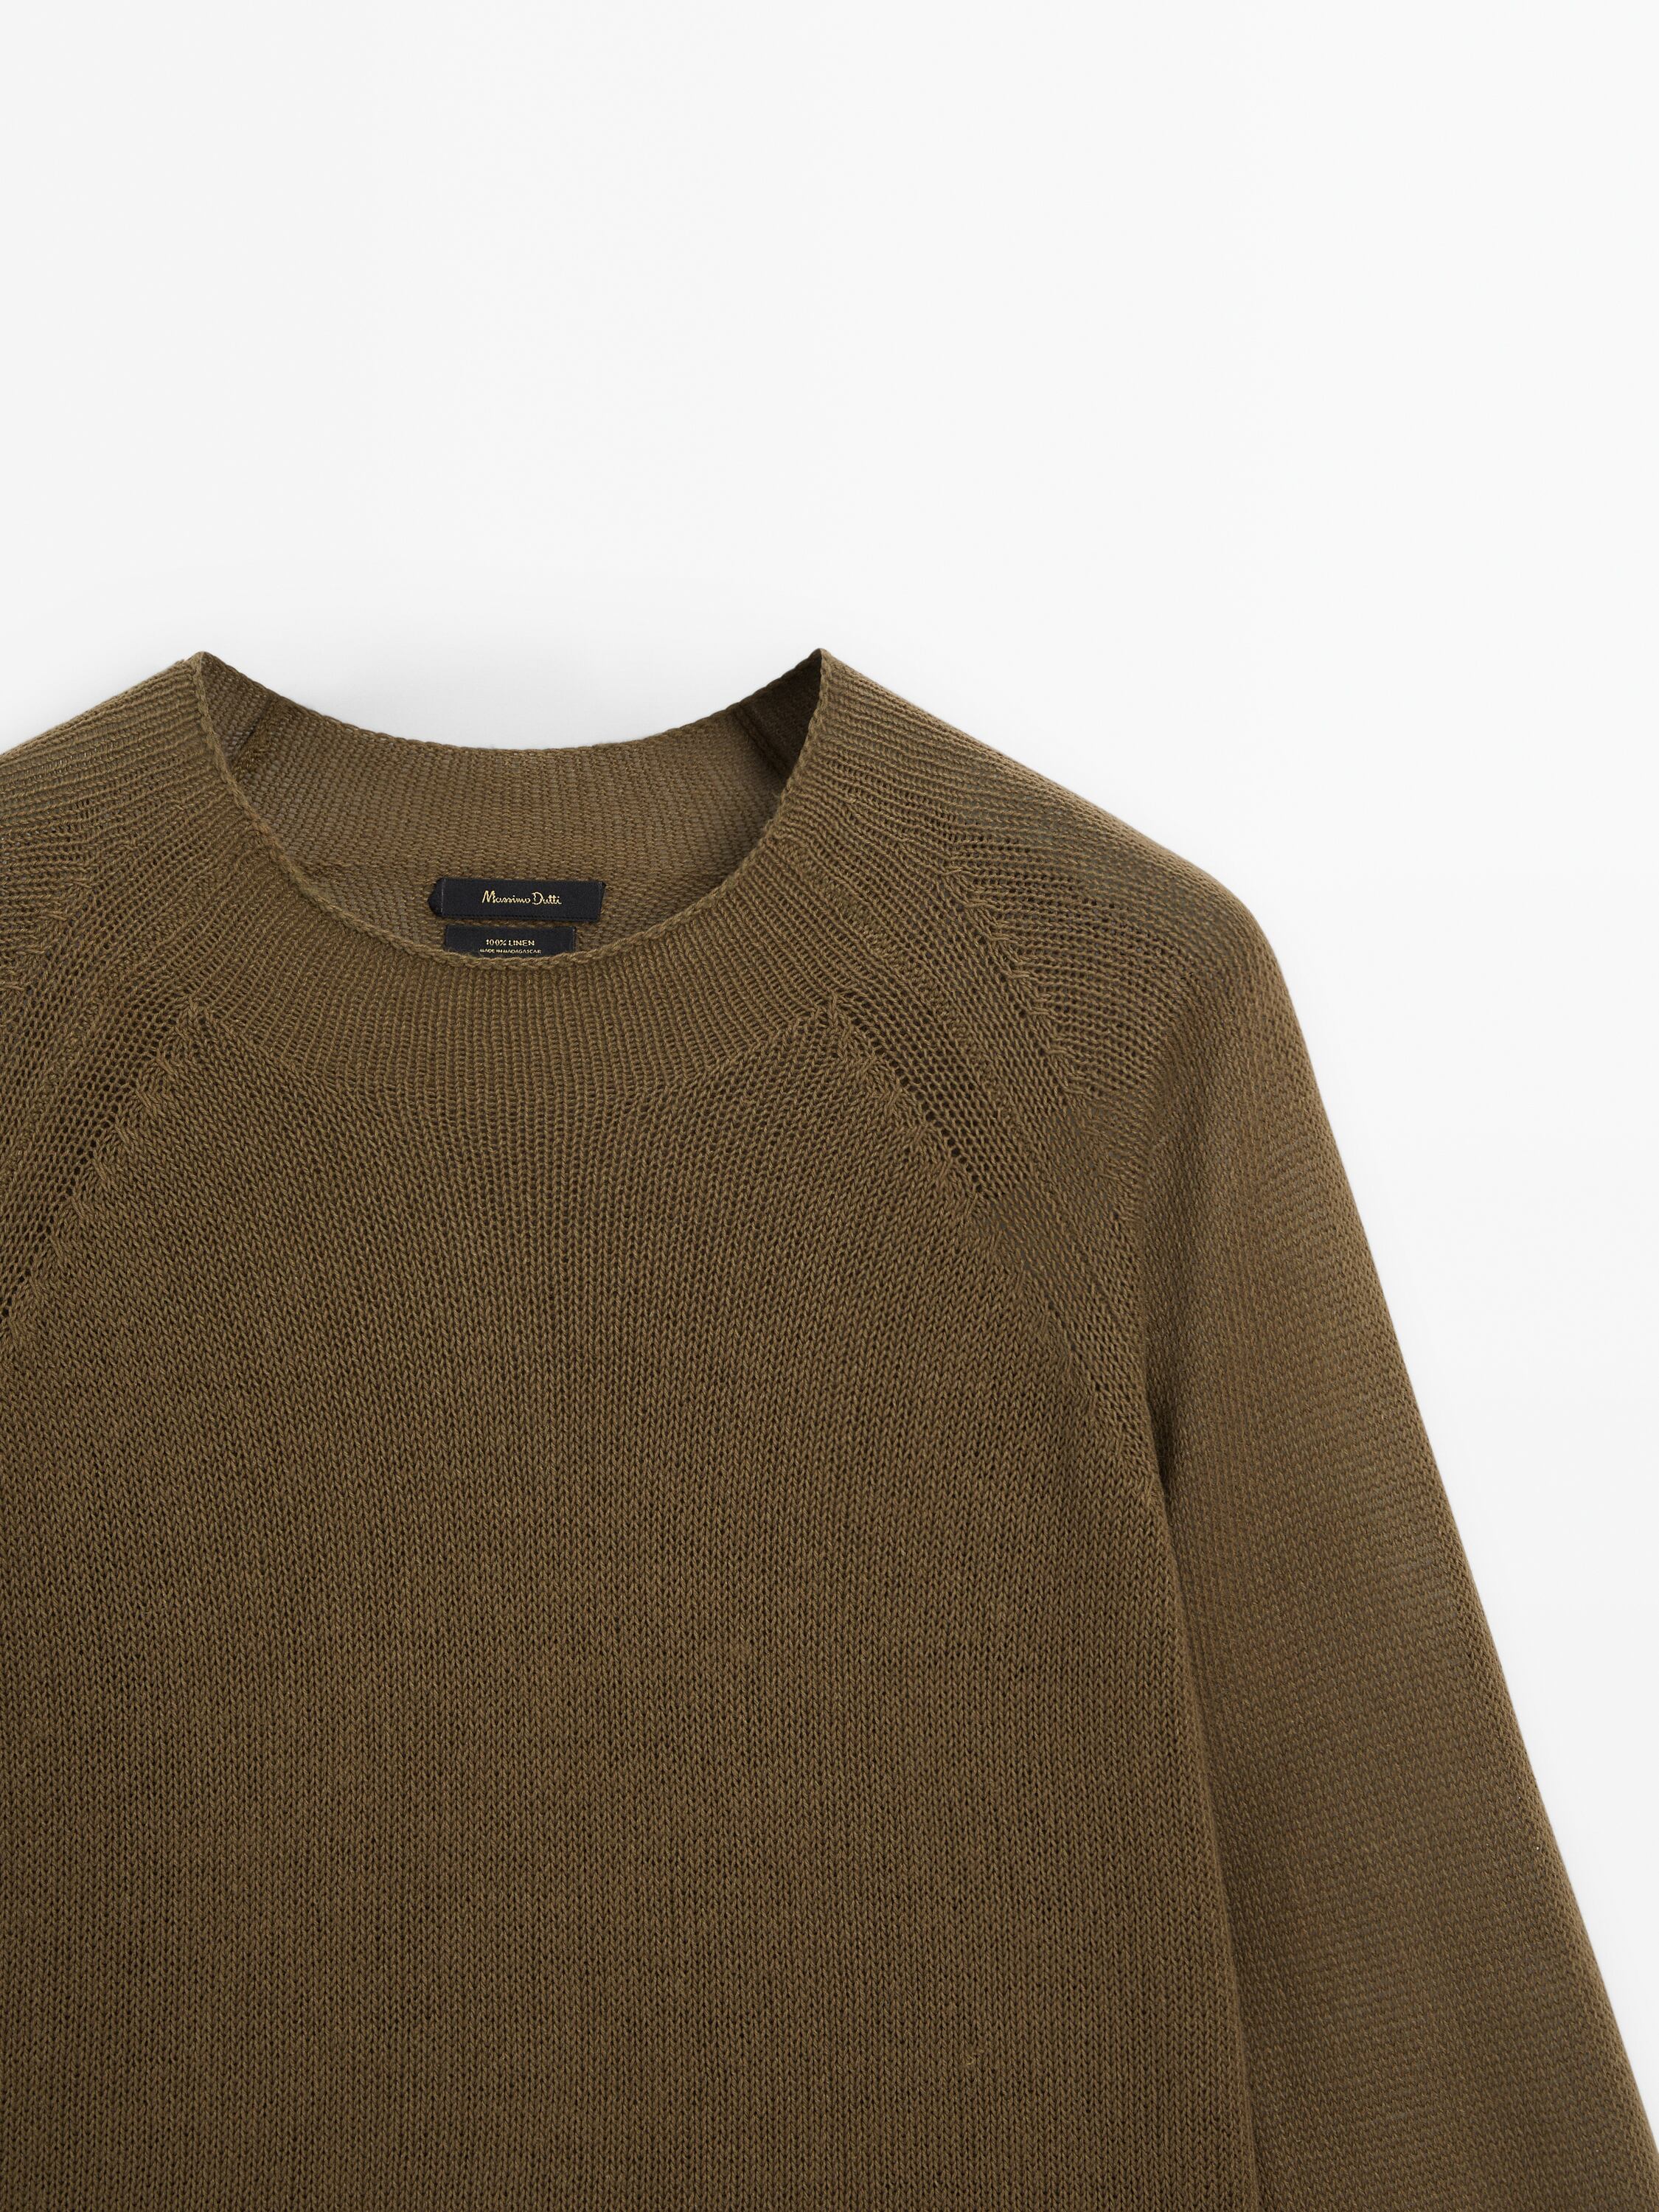 100% linen mock turtleneck sweater